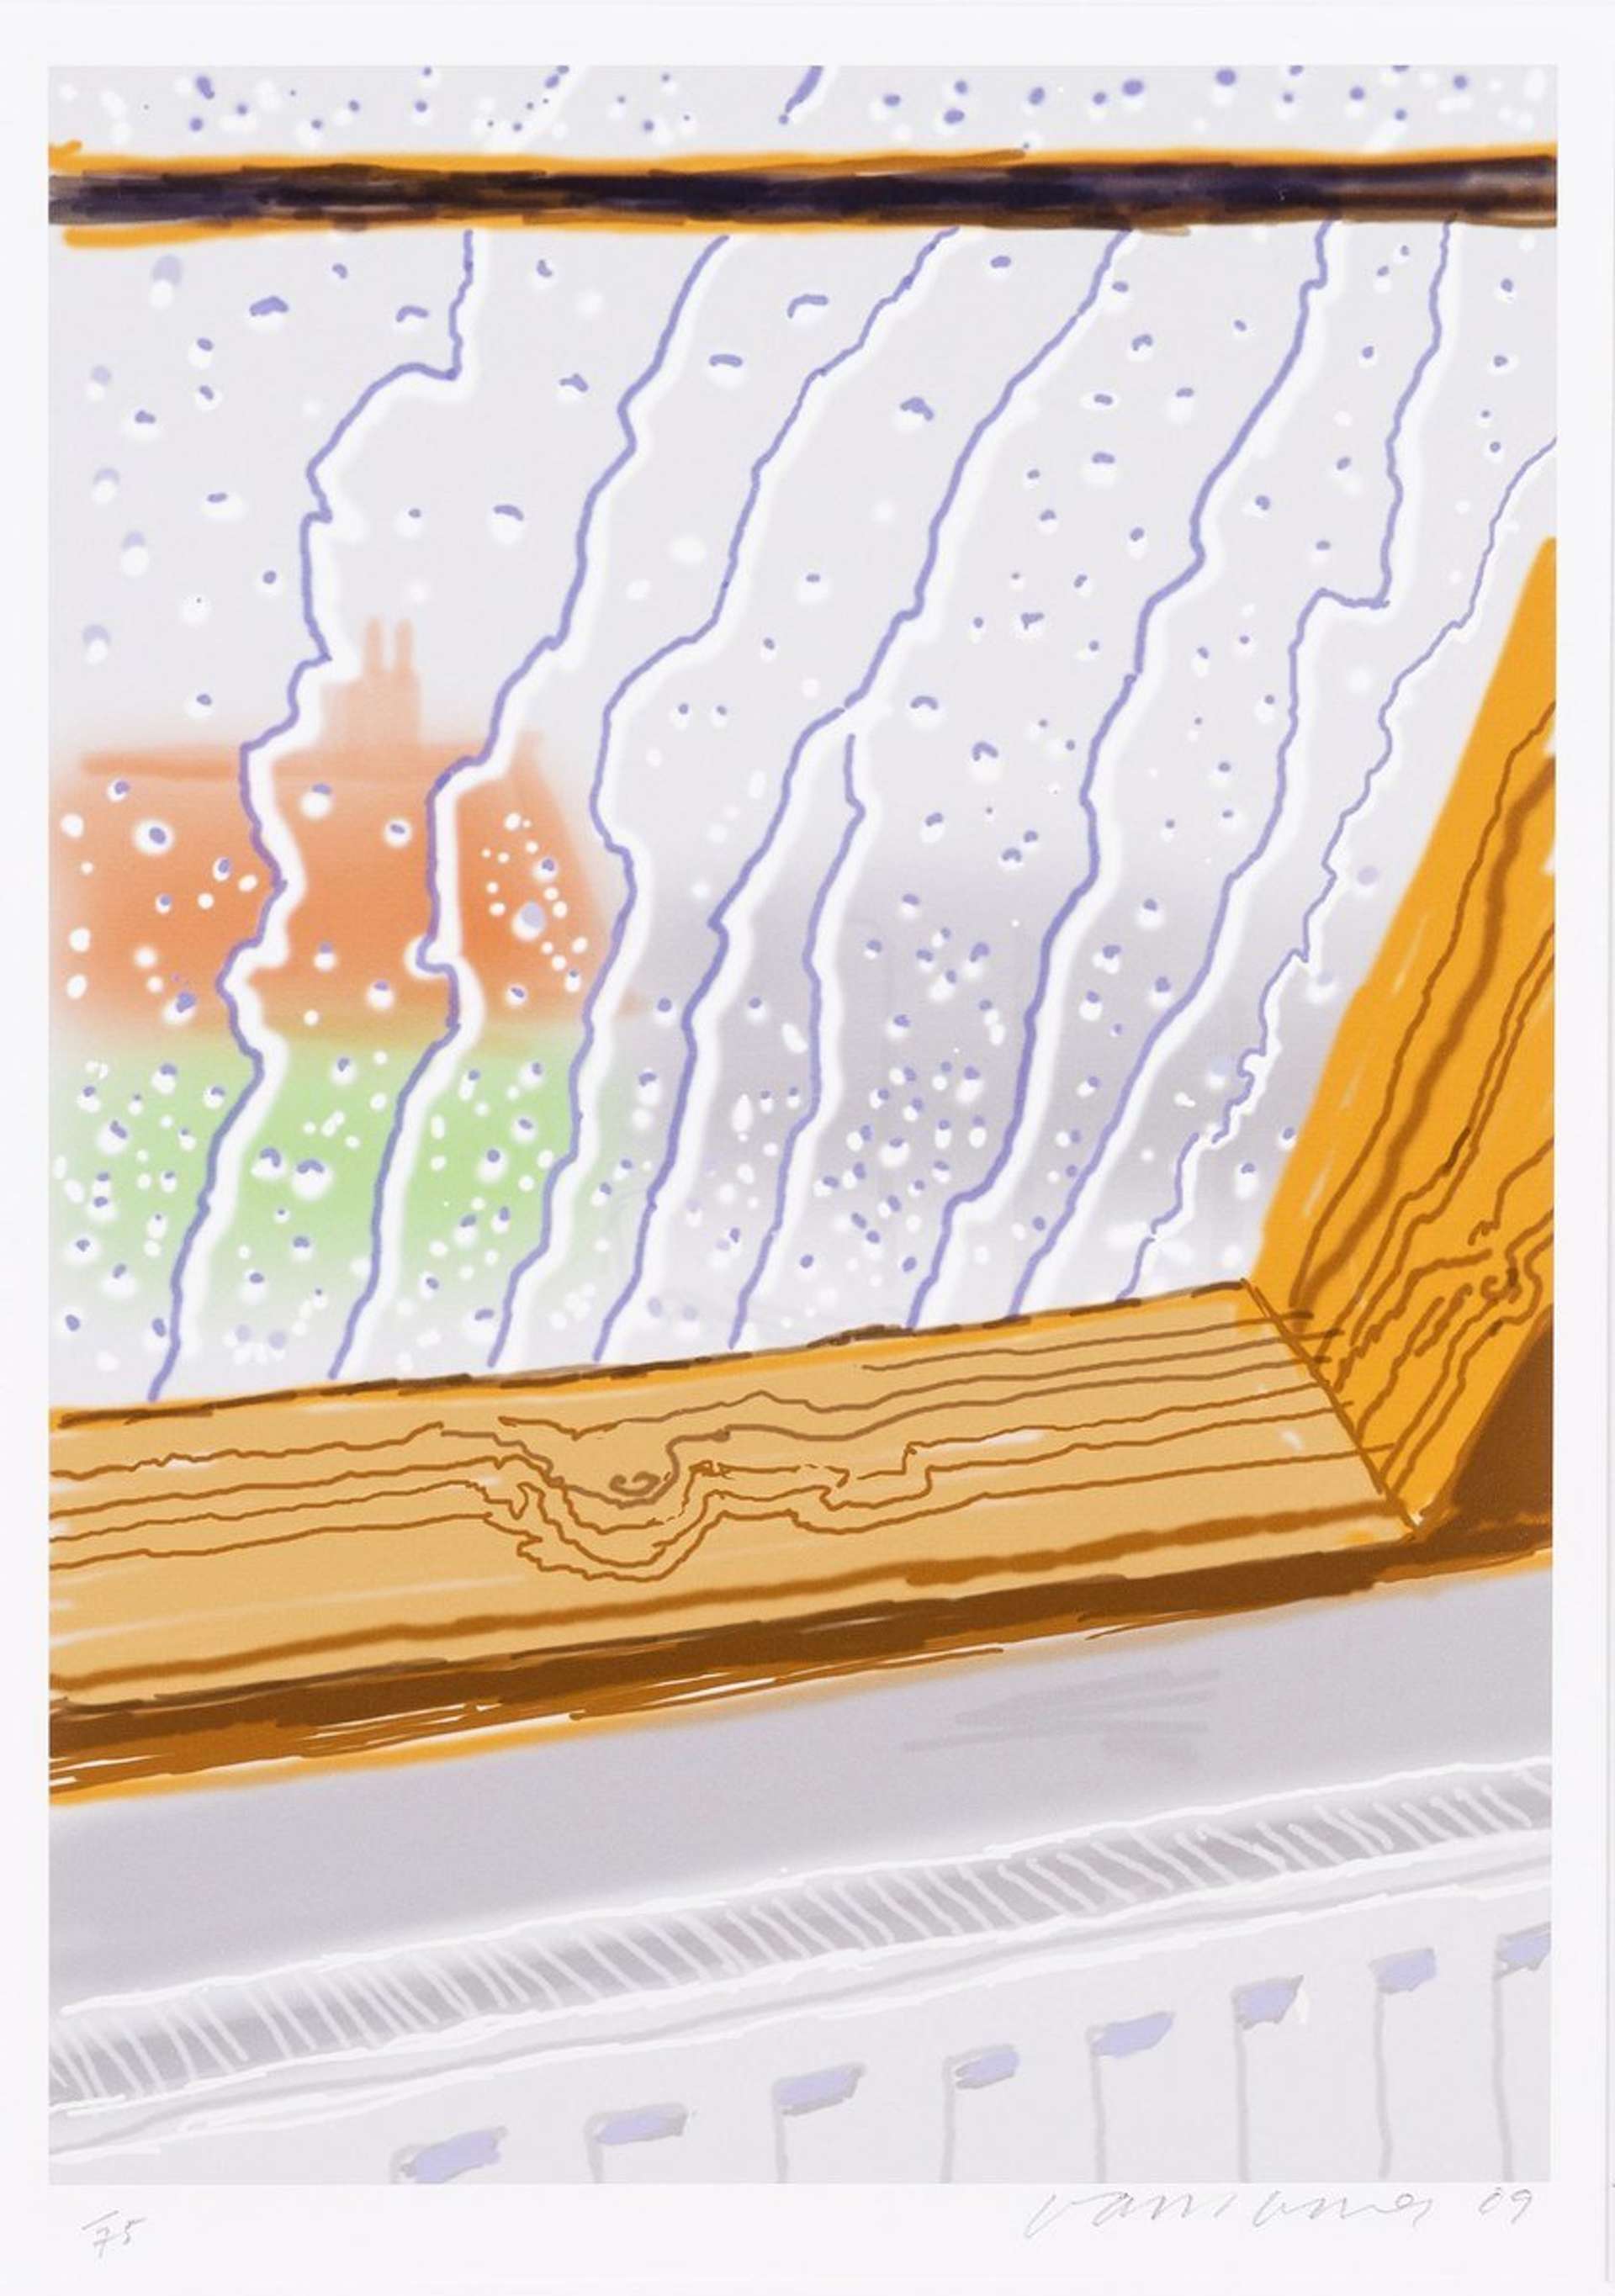 Rain On The Studio Window by David Hockney